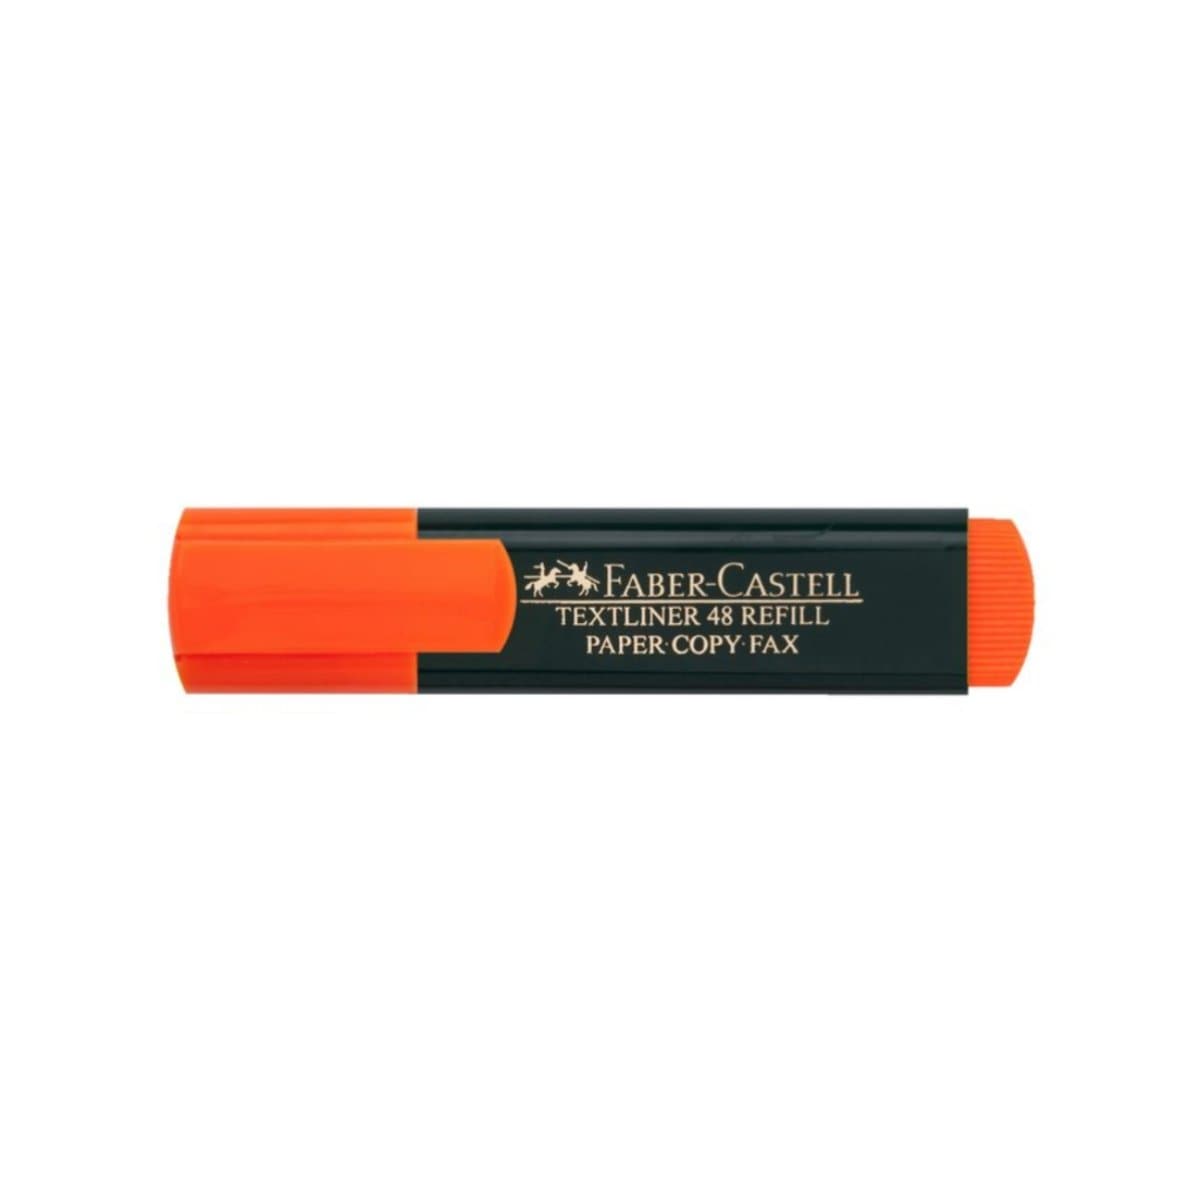 Faber Castell Highlighter, Textliner 48, Orange